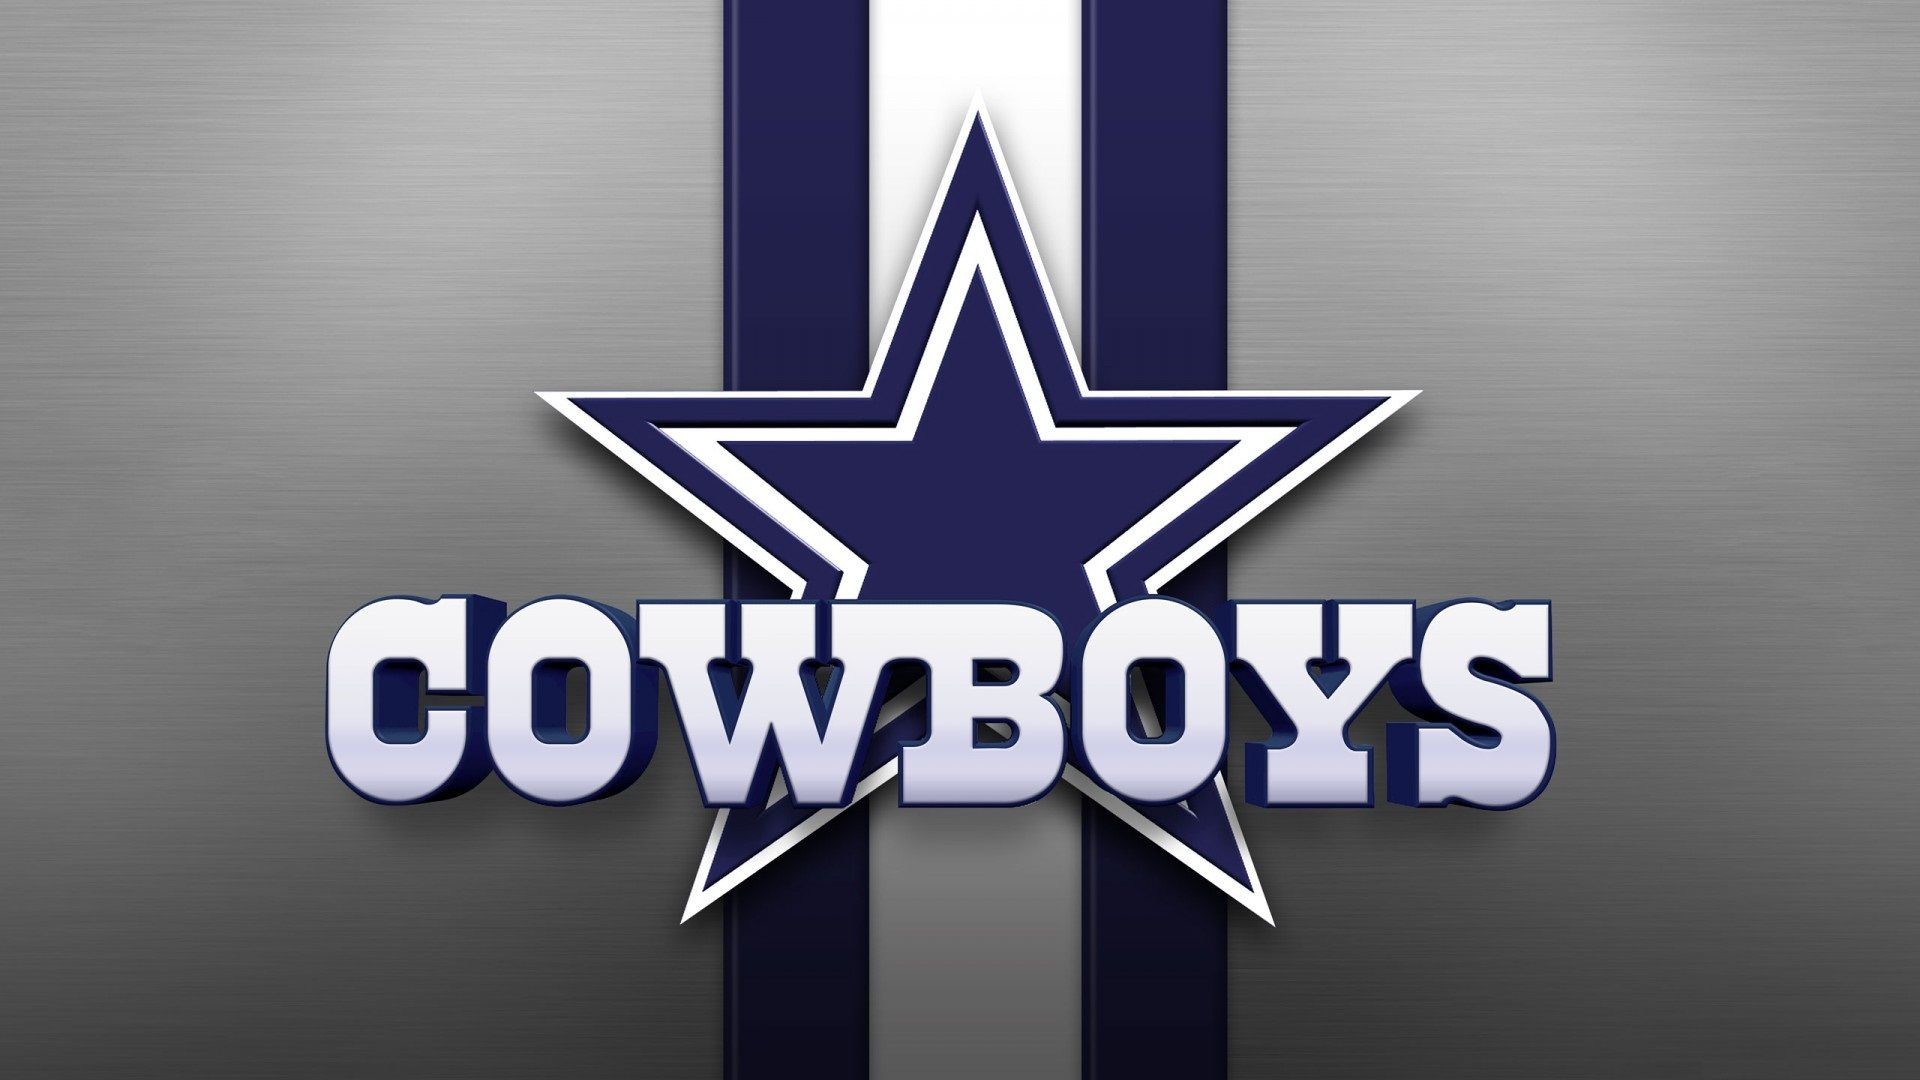 Dallas Cowboys Logos And Wallpapers (65+ images)